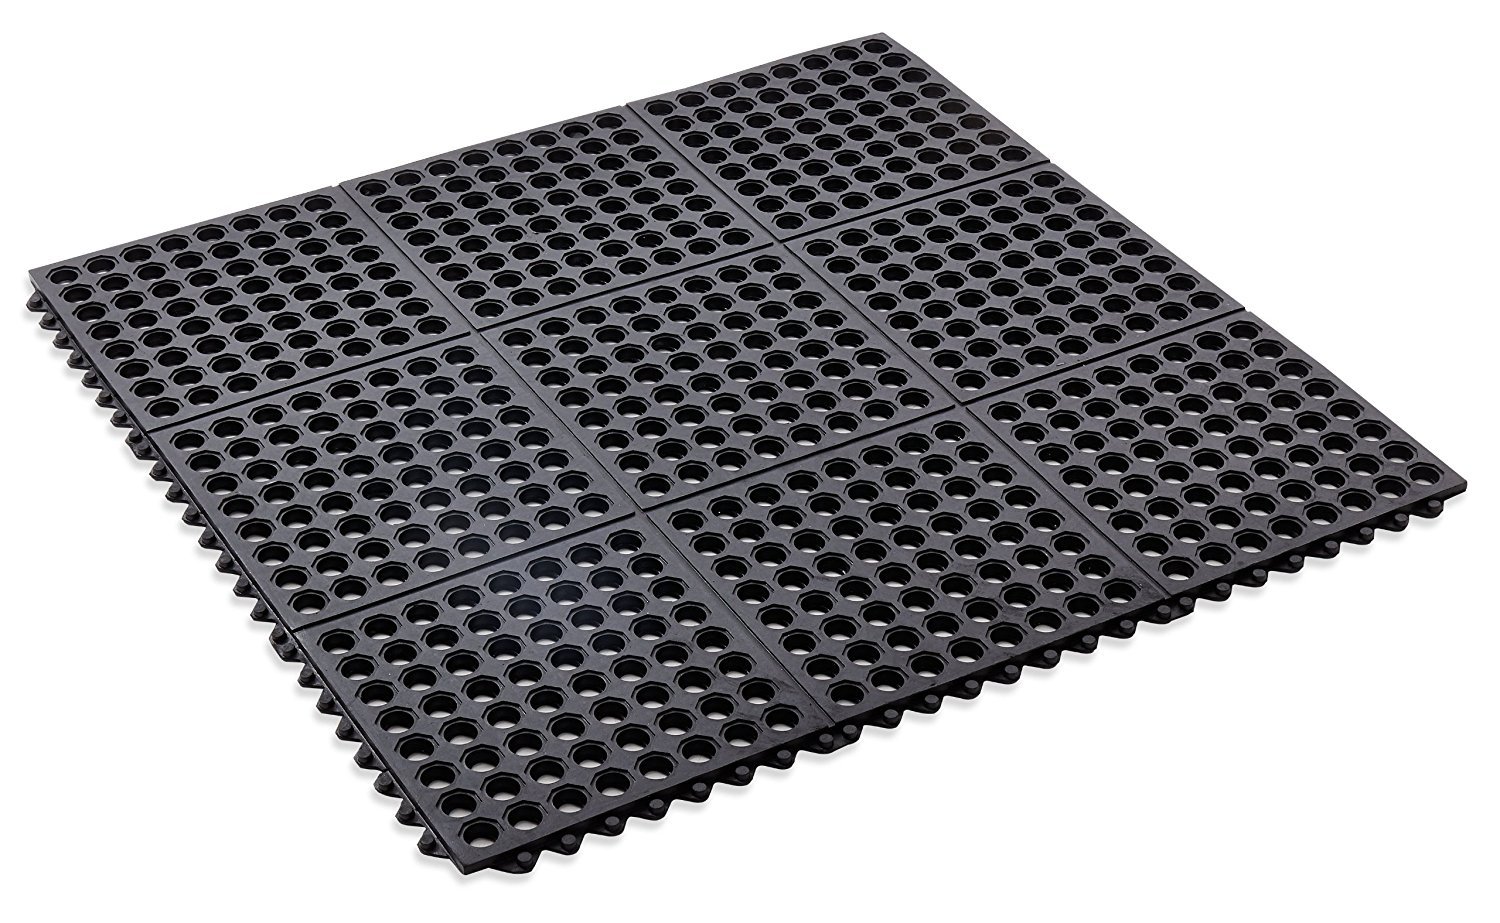 Rubber Safety Mat Anti Fatigue Kitchen Flooring Drainage Hole mat